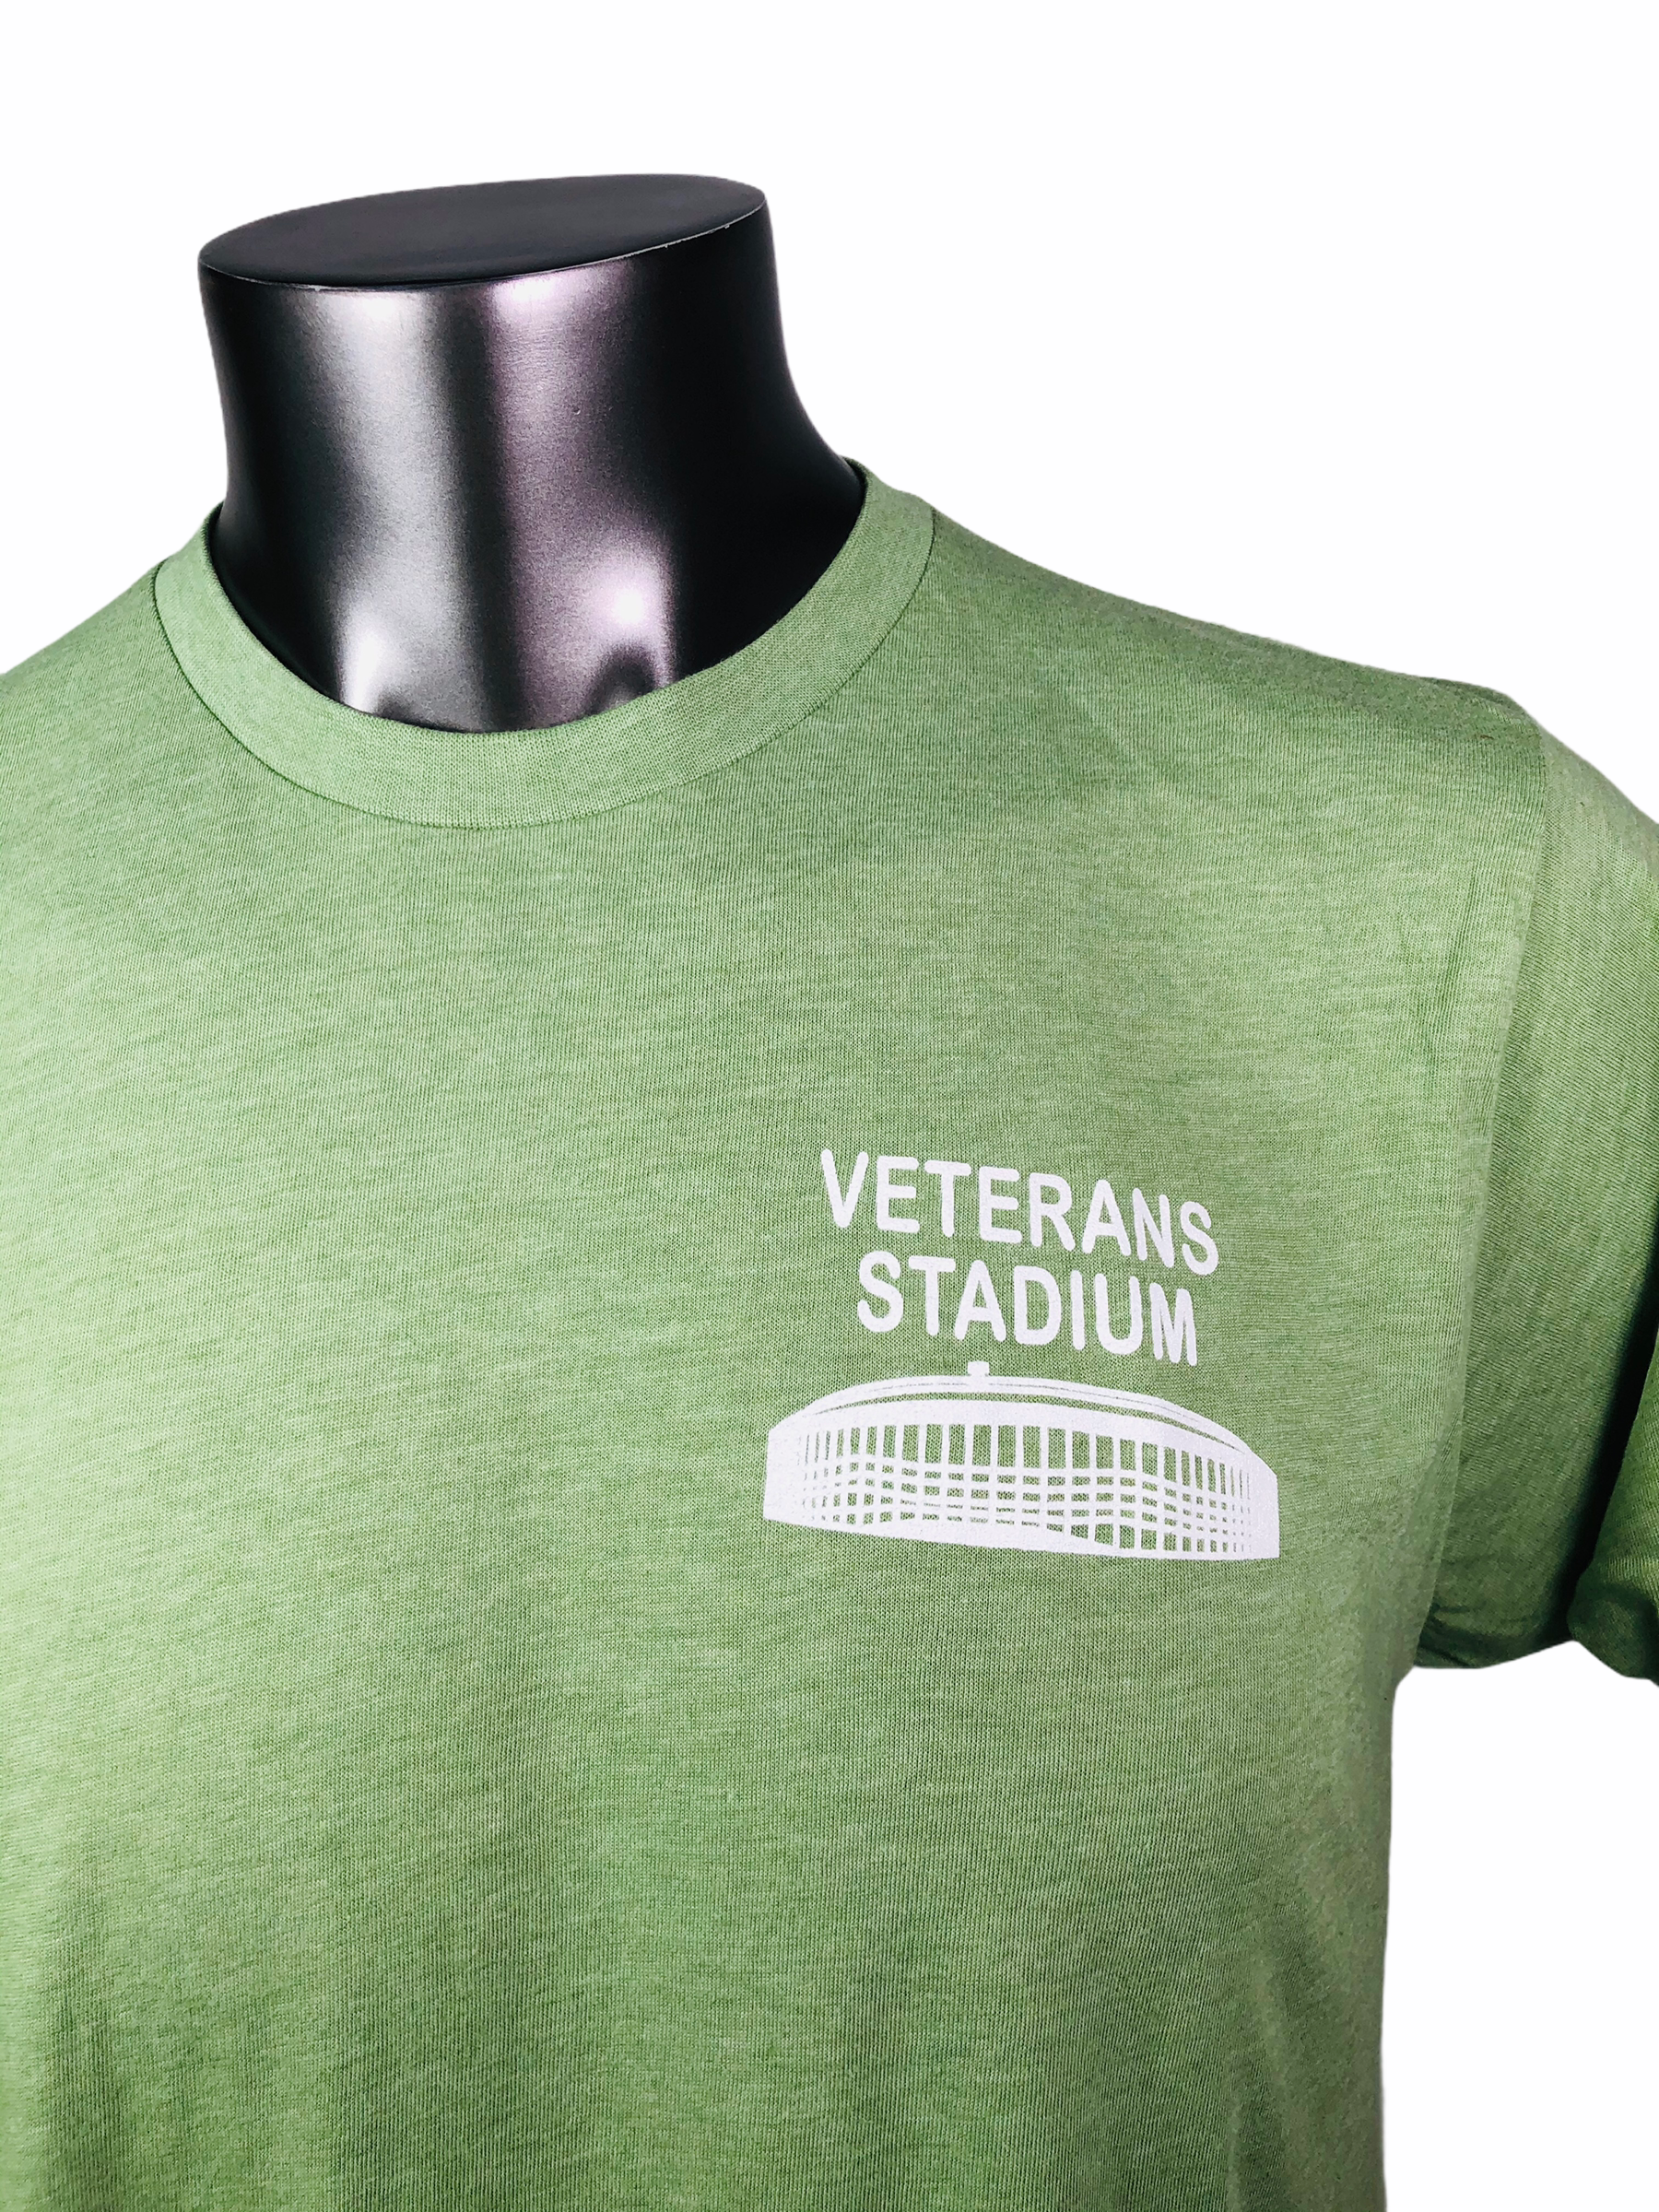 Veterans Stadium Come Out Fightin' t-shirt - Men's